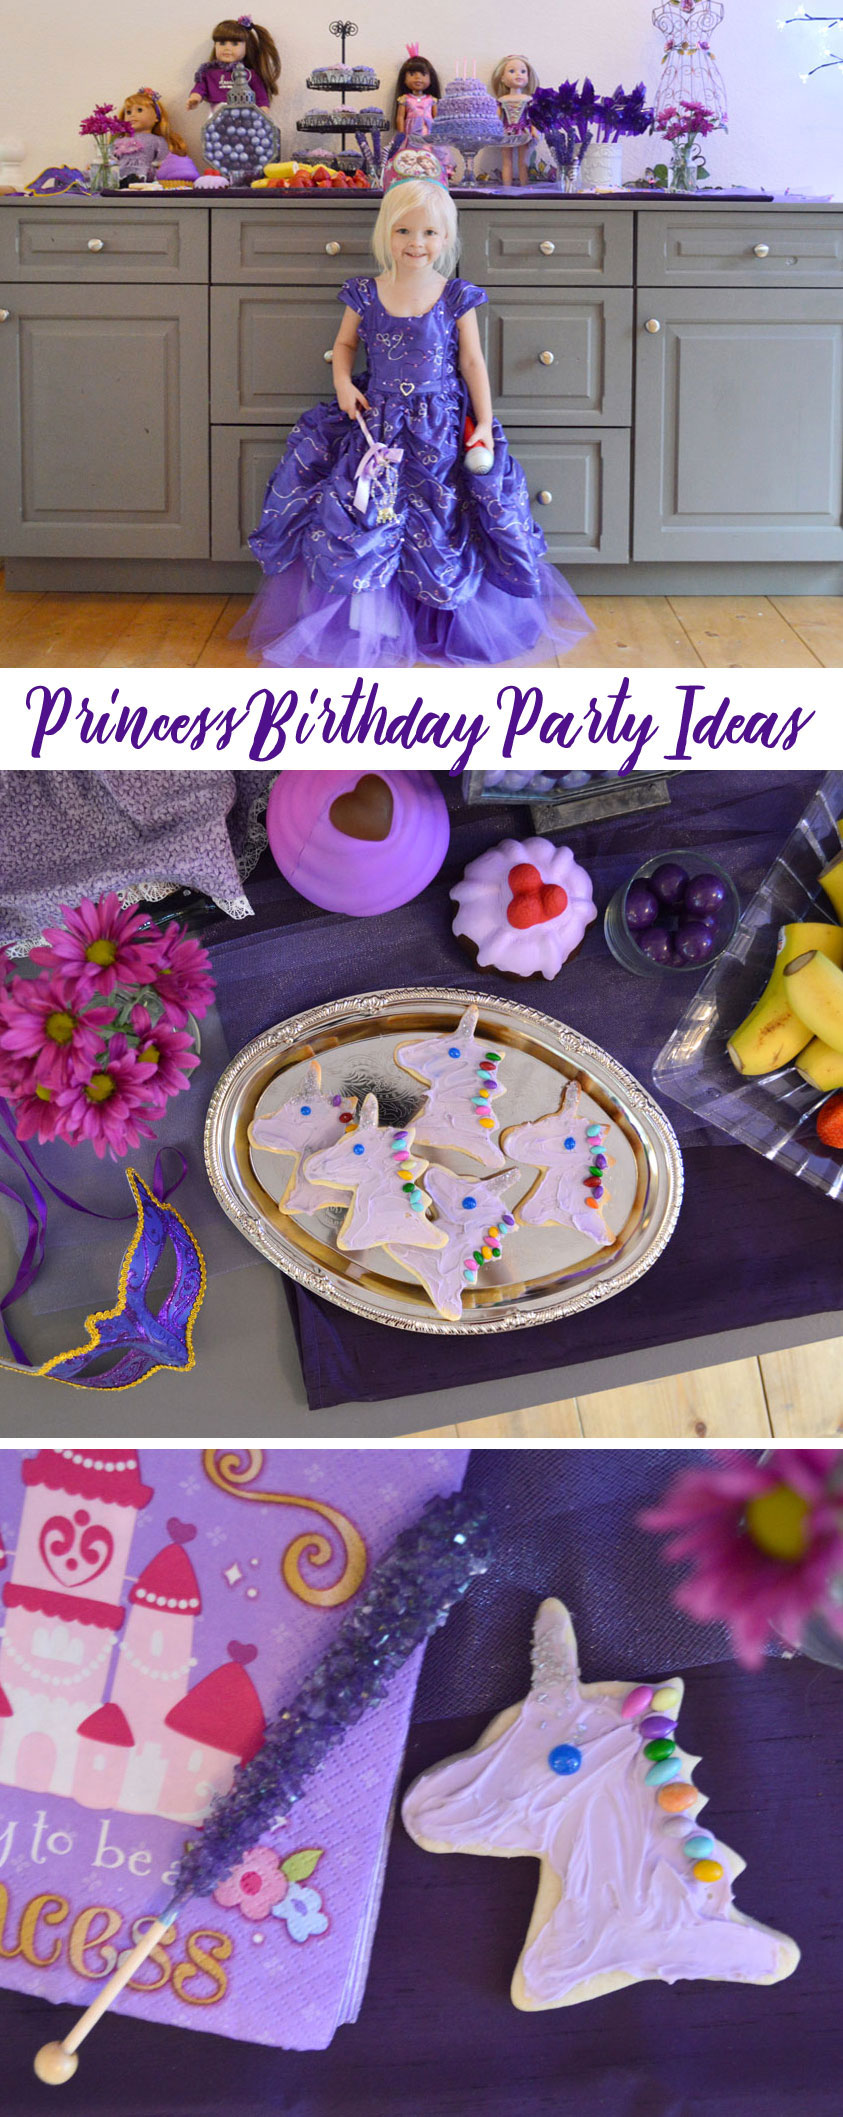 Princess Birthday Party ideas purple unicorn cookies